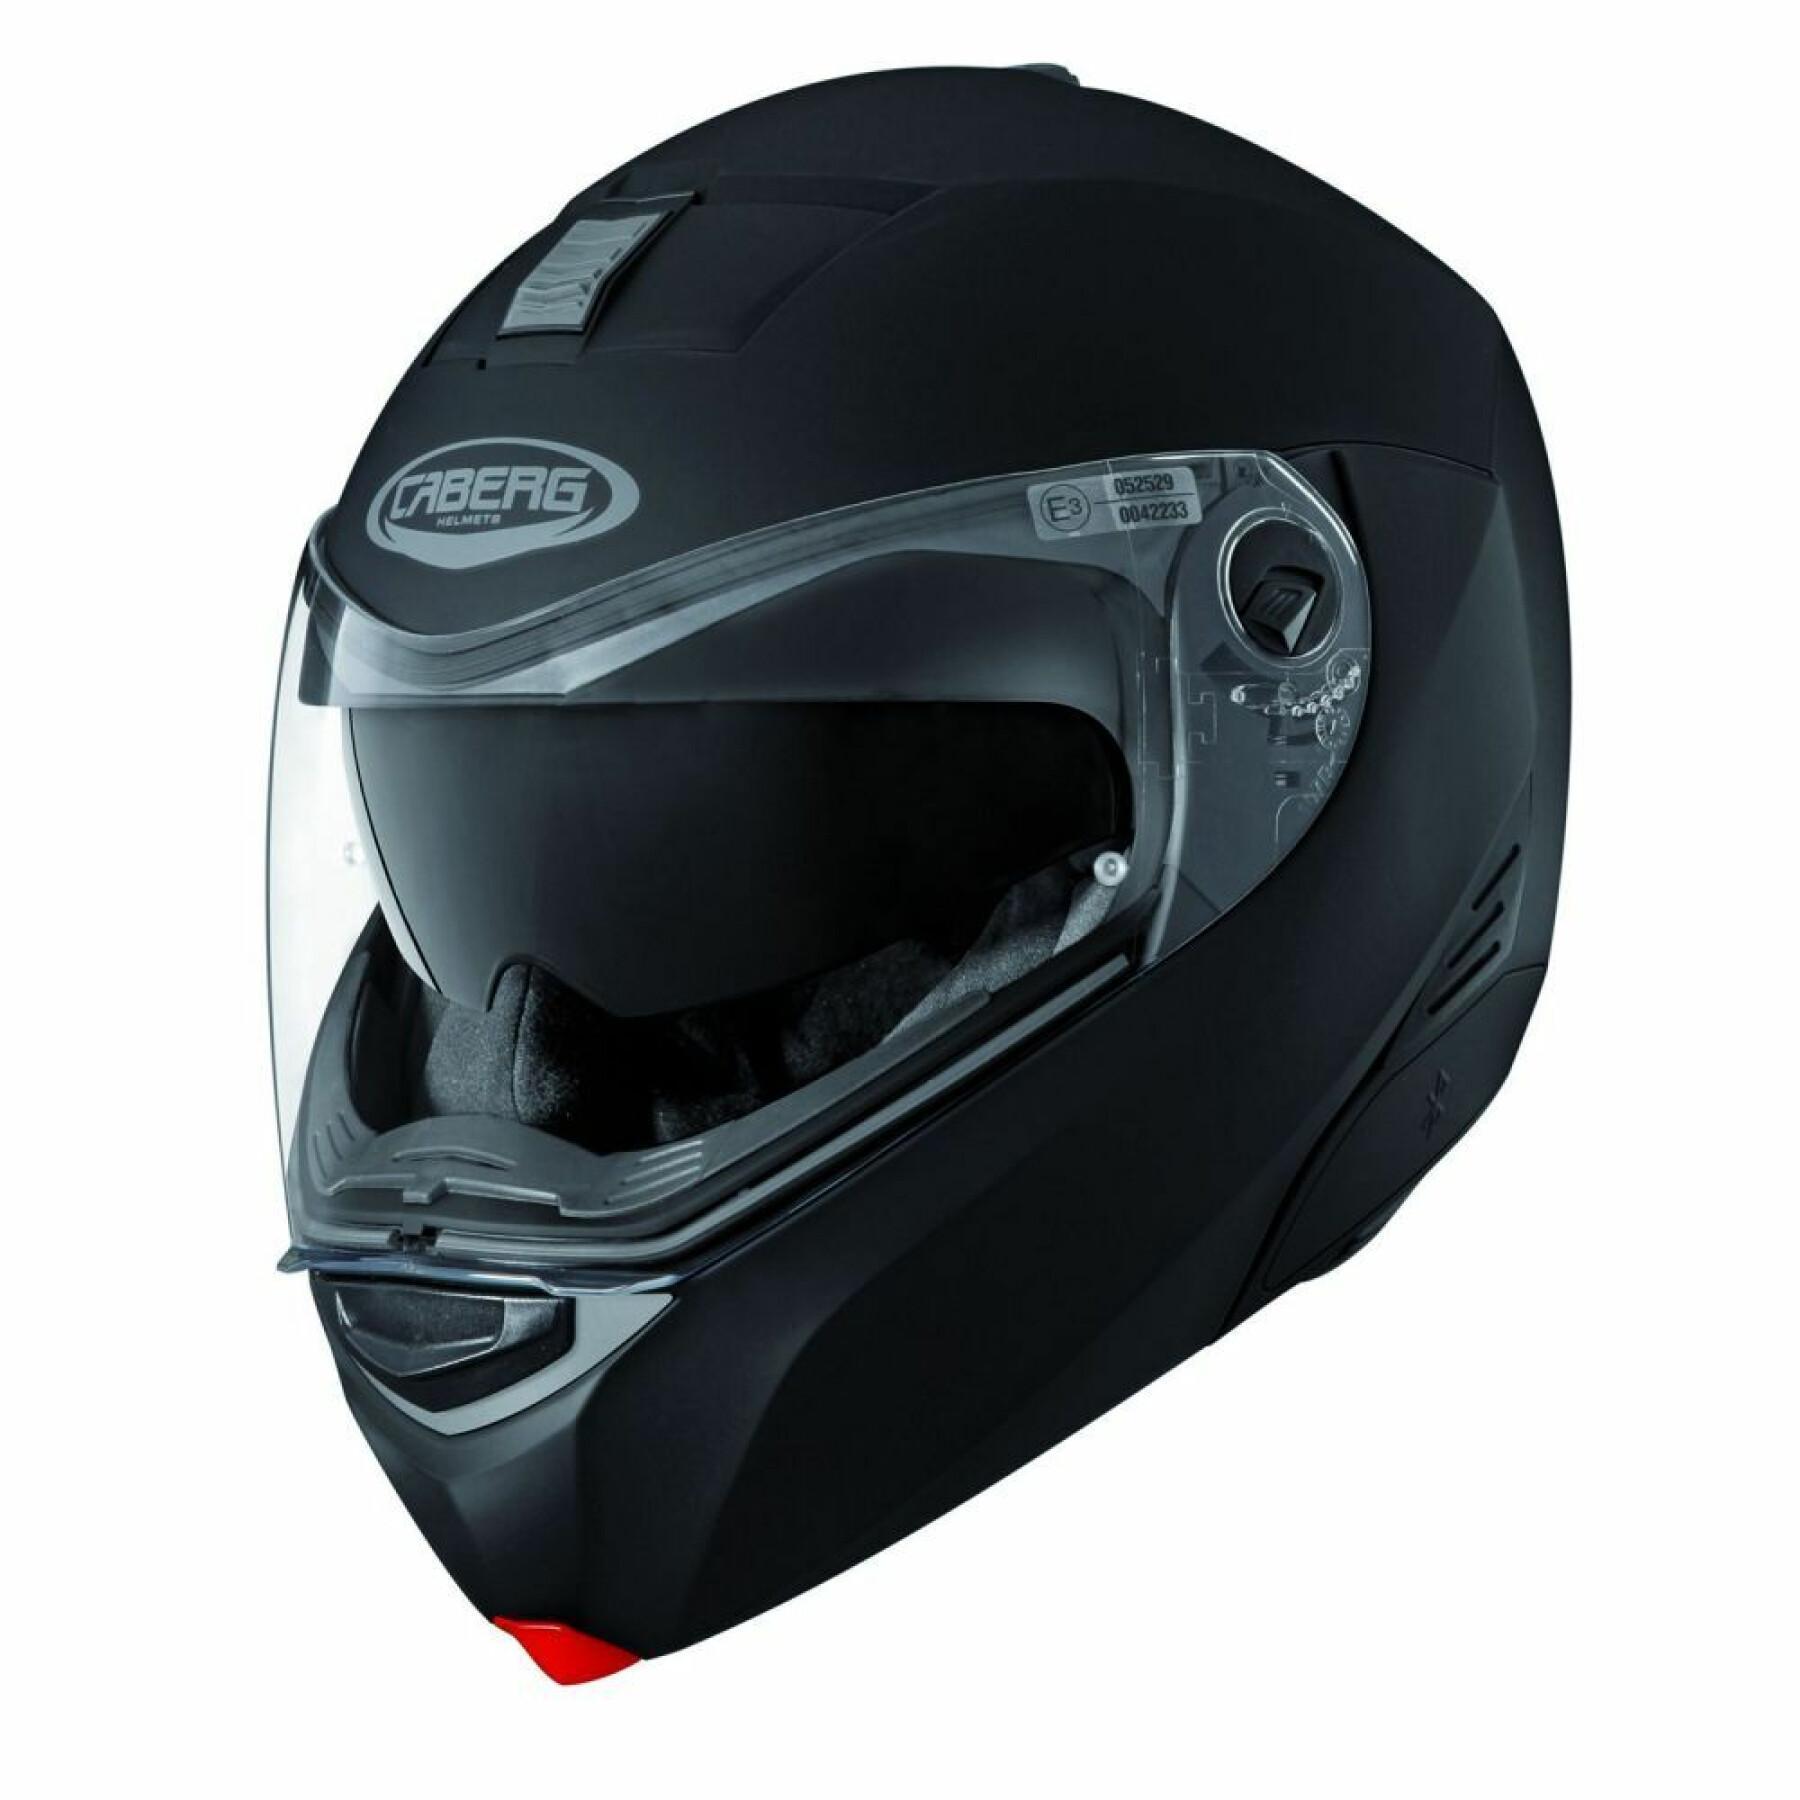 Modular motorcycle helmet Caberg modus